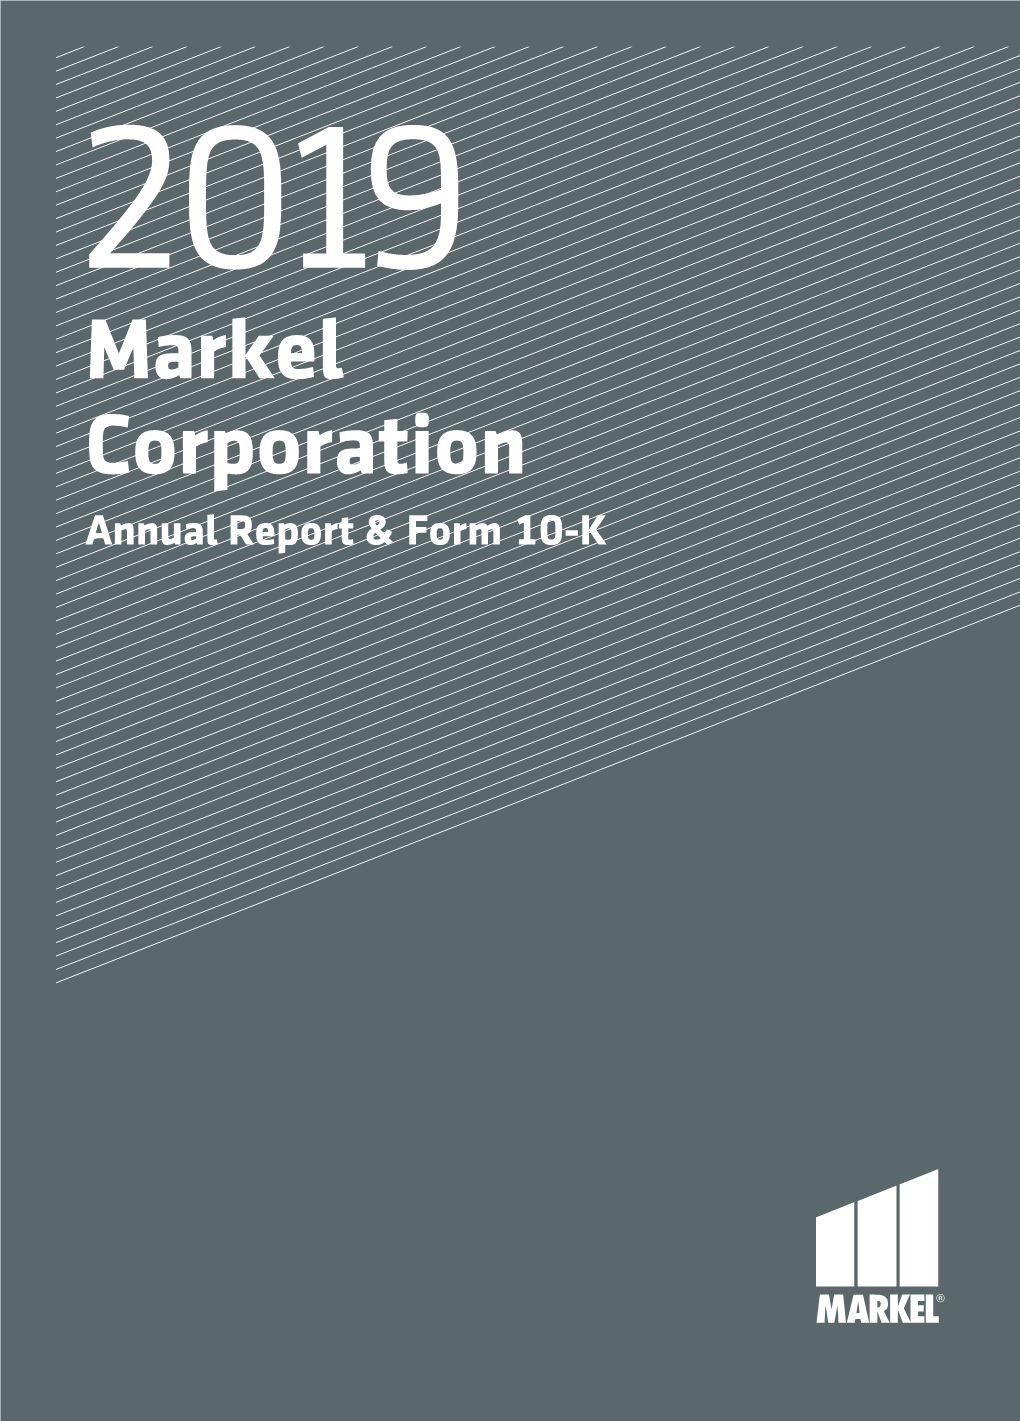 Markel Corporation Annual Report & Form 10-K the CORPORATE PROFILE